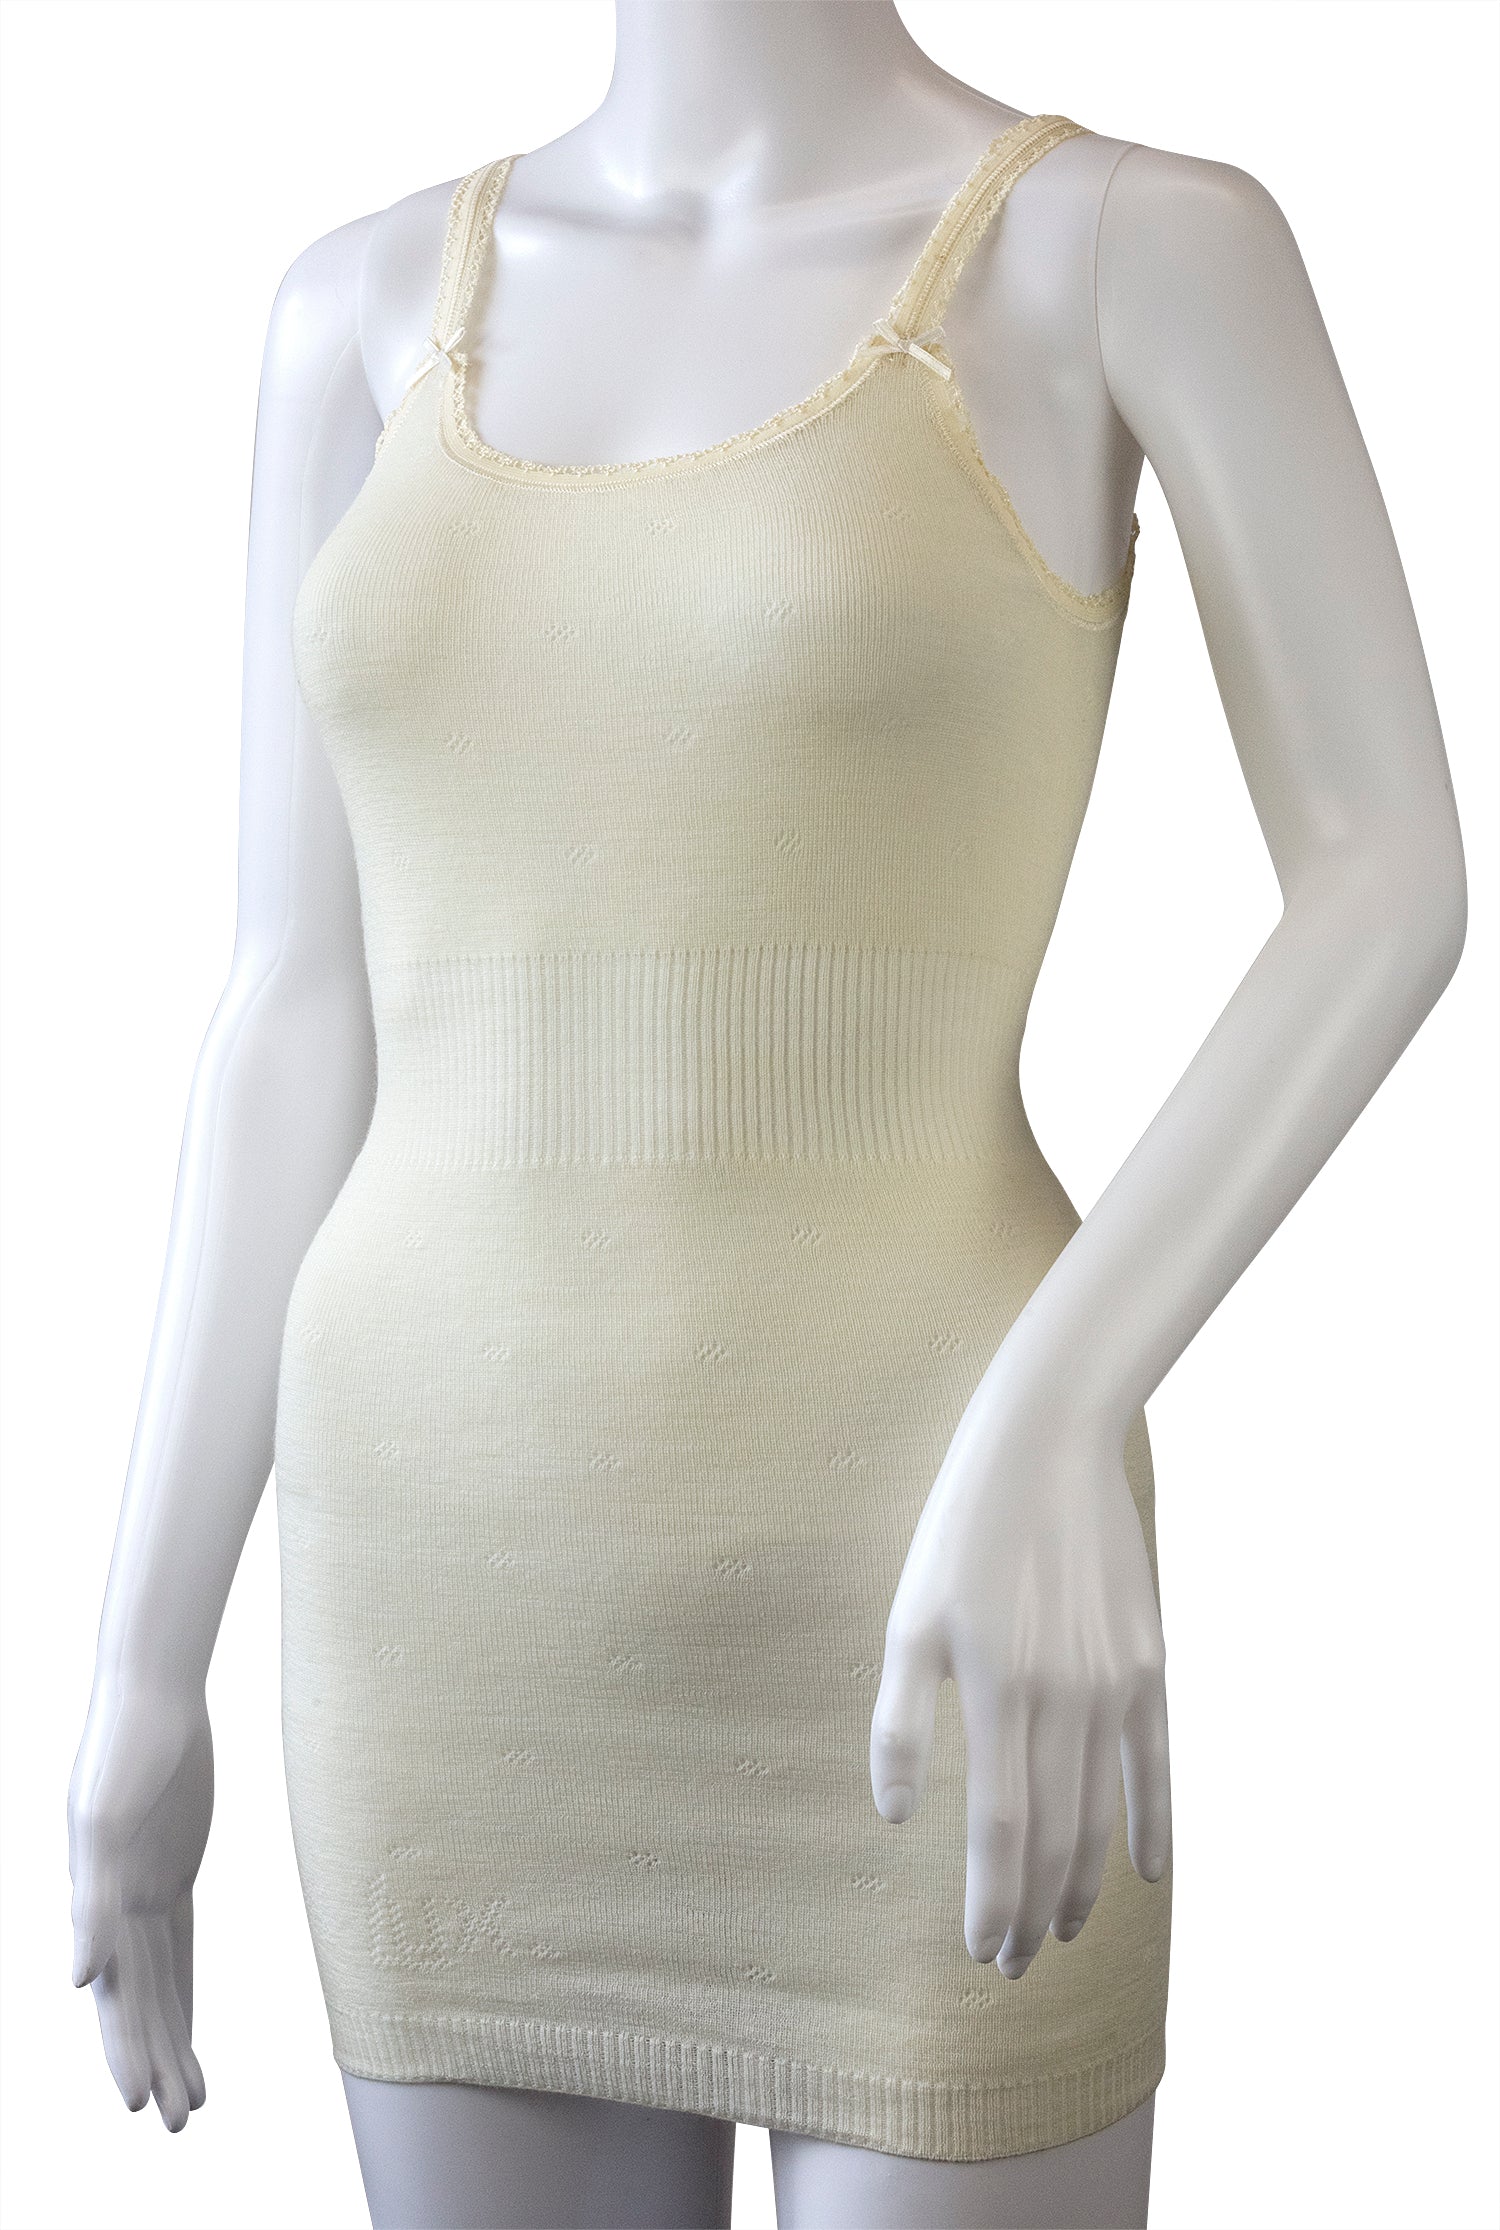 French Neck Vest | Wool Thermal Underwear for Women | Lux Lux Ltd